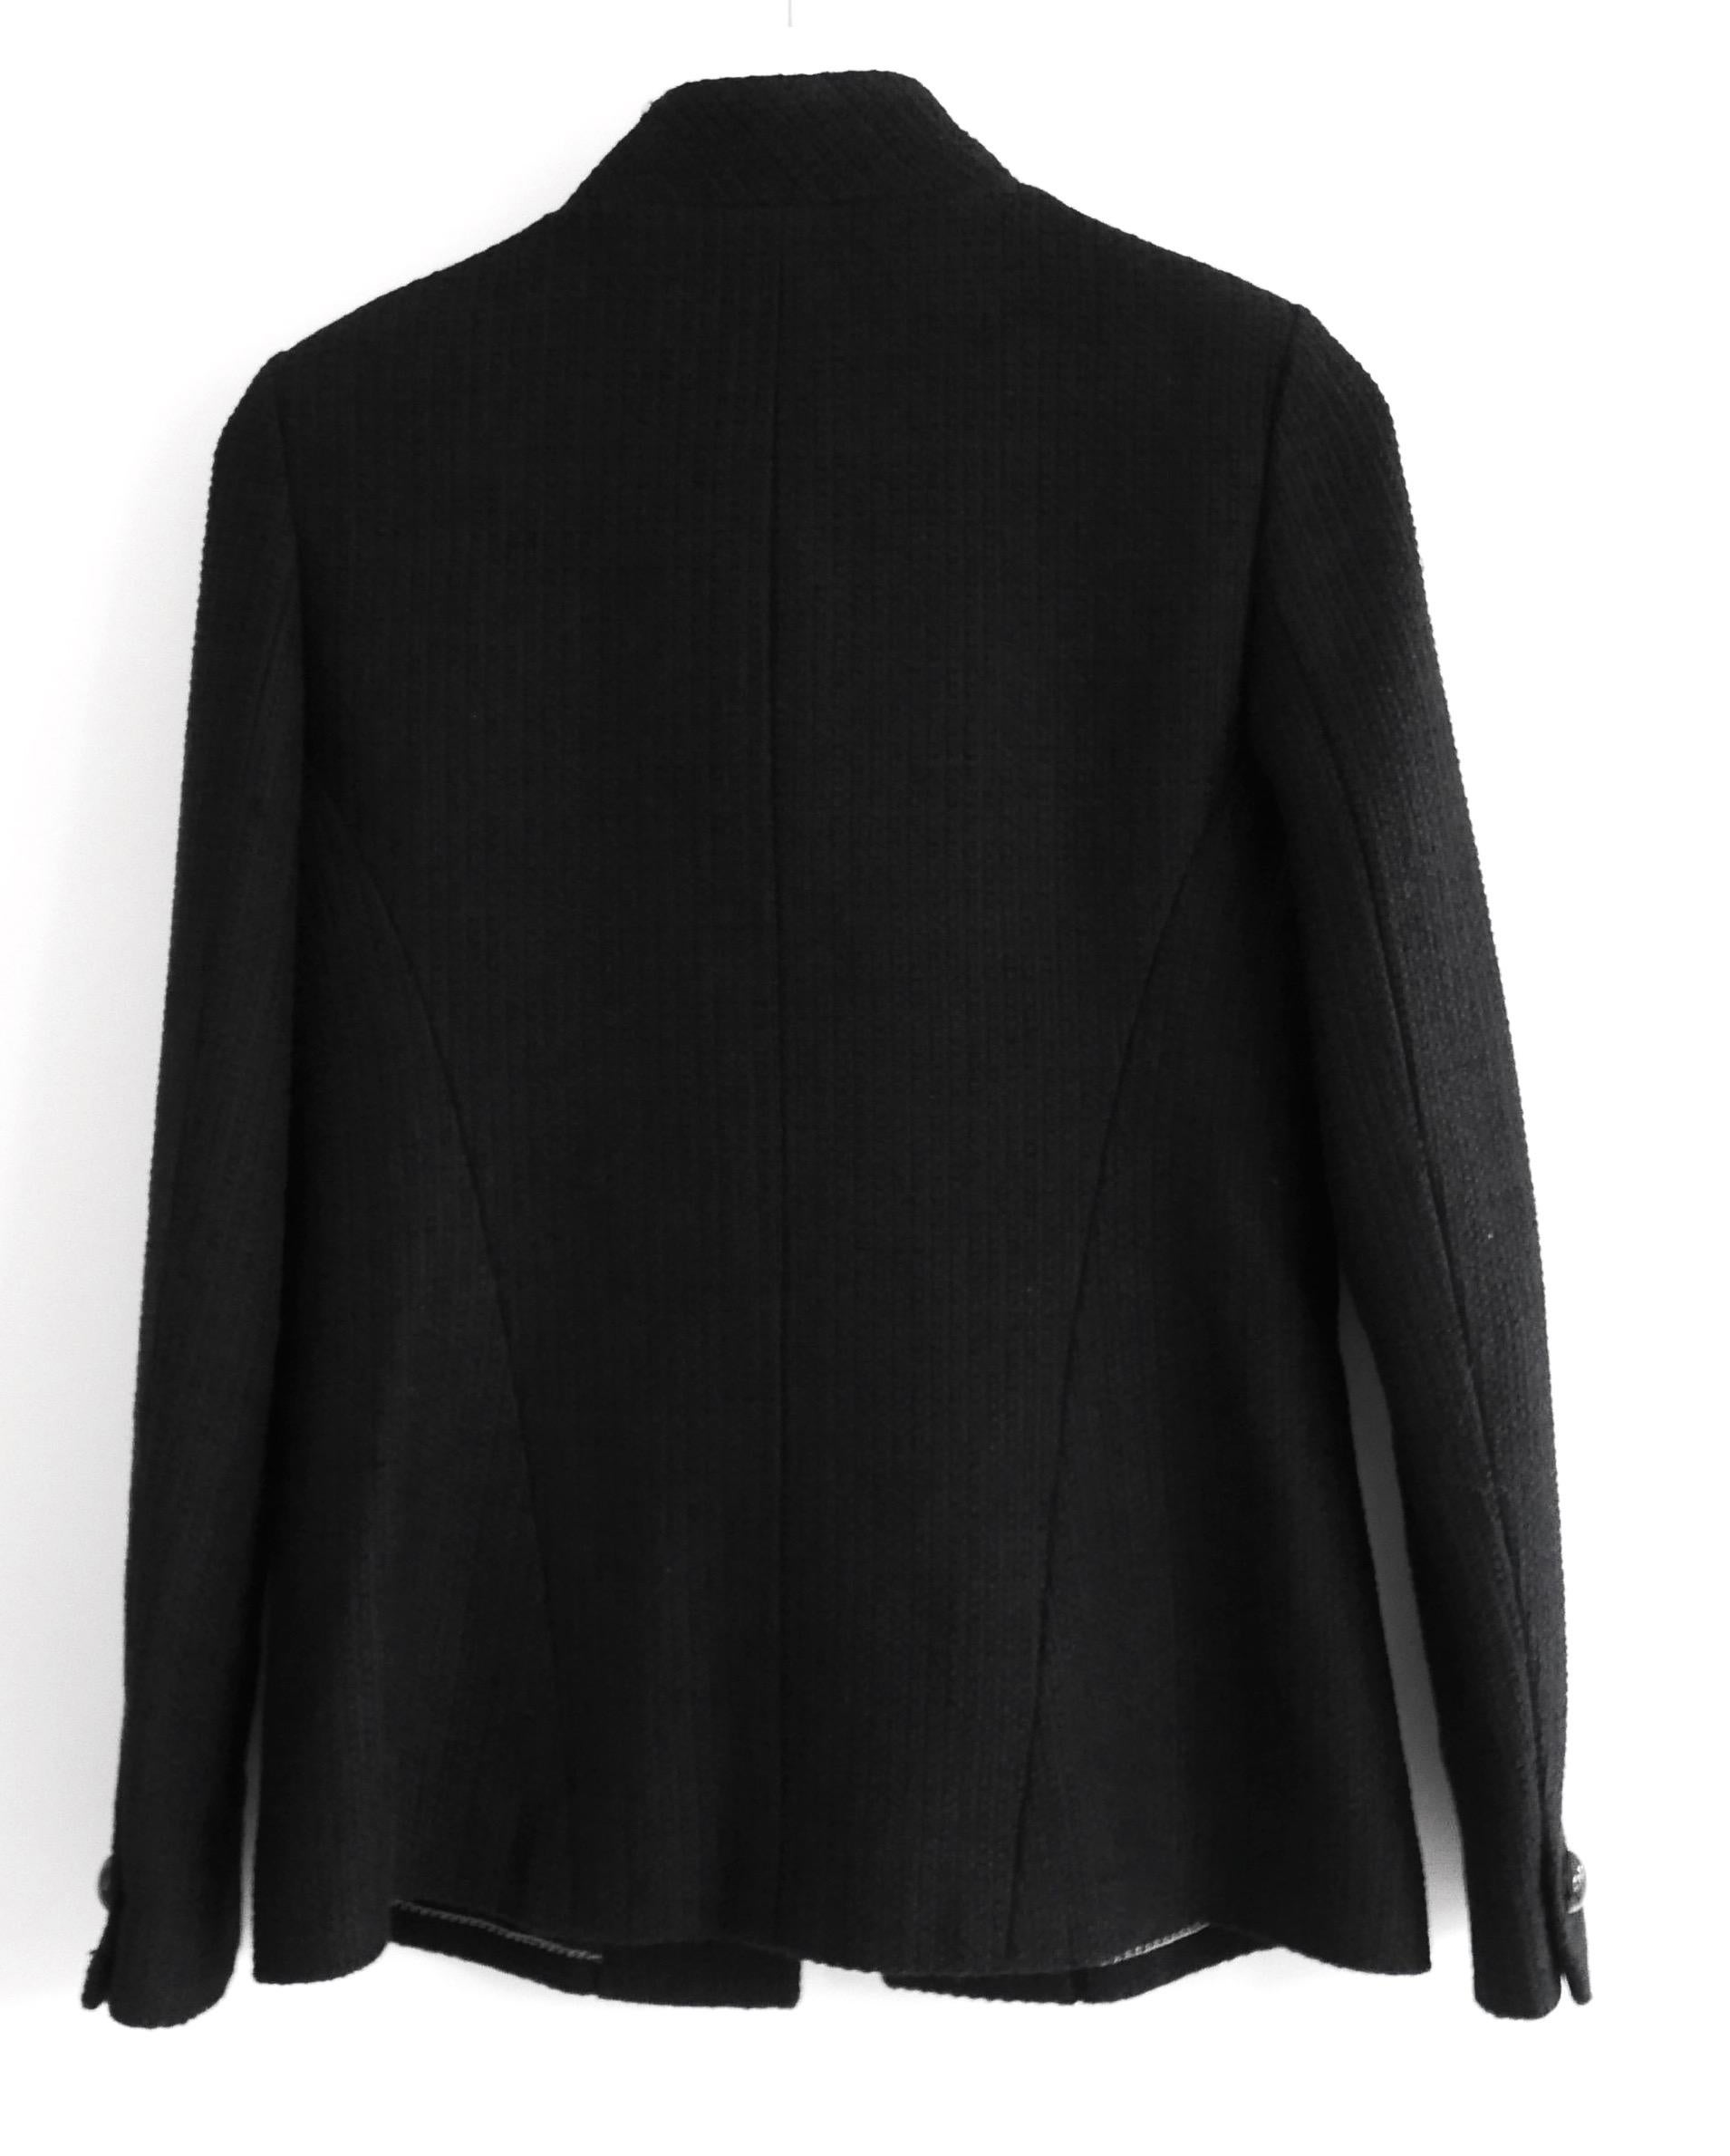 Chanel Resort 2015 Black Tweed Jacket For Sale 1